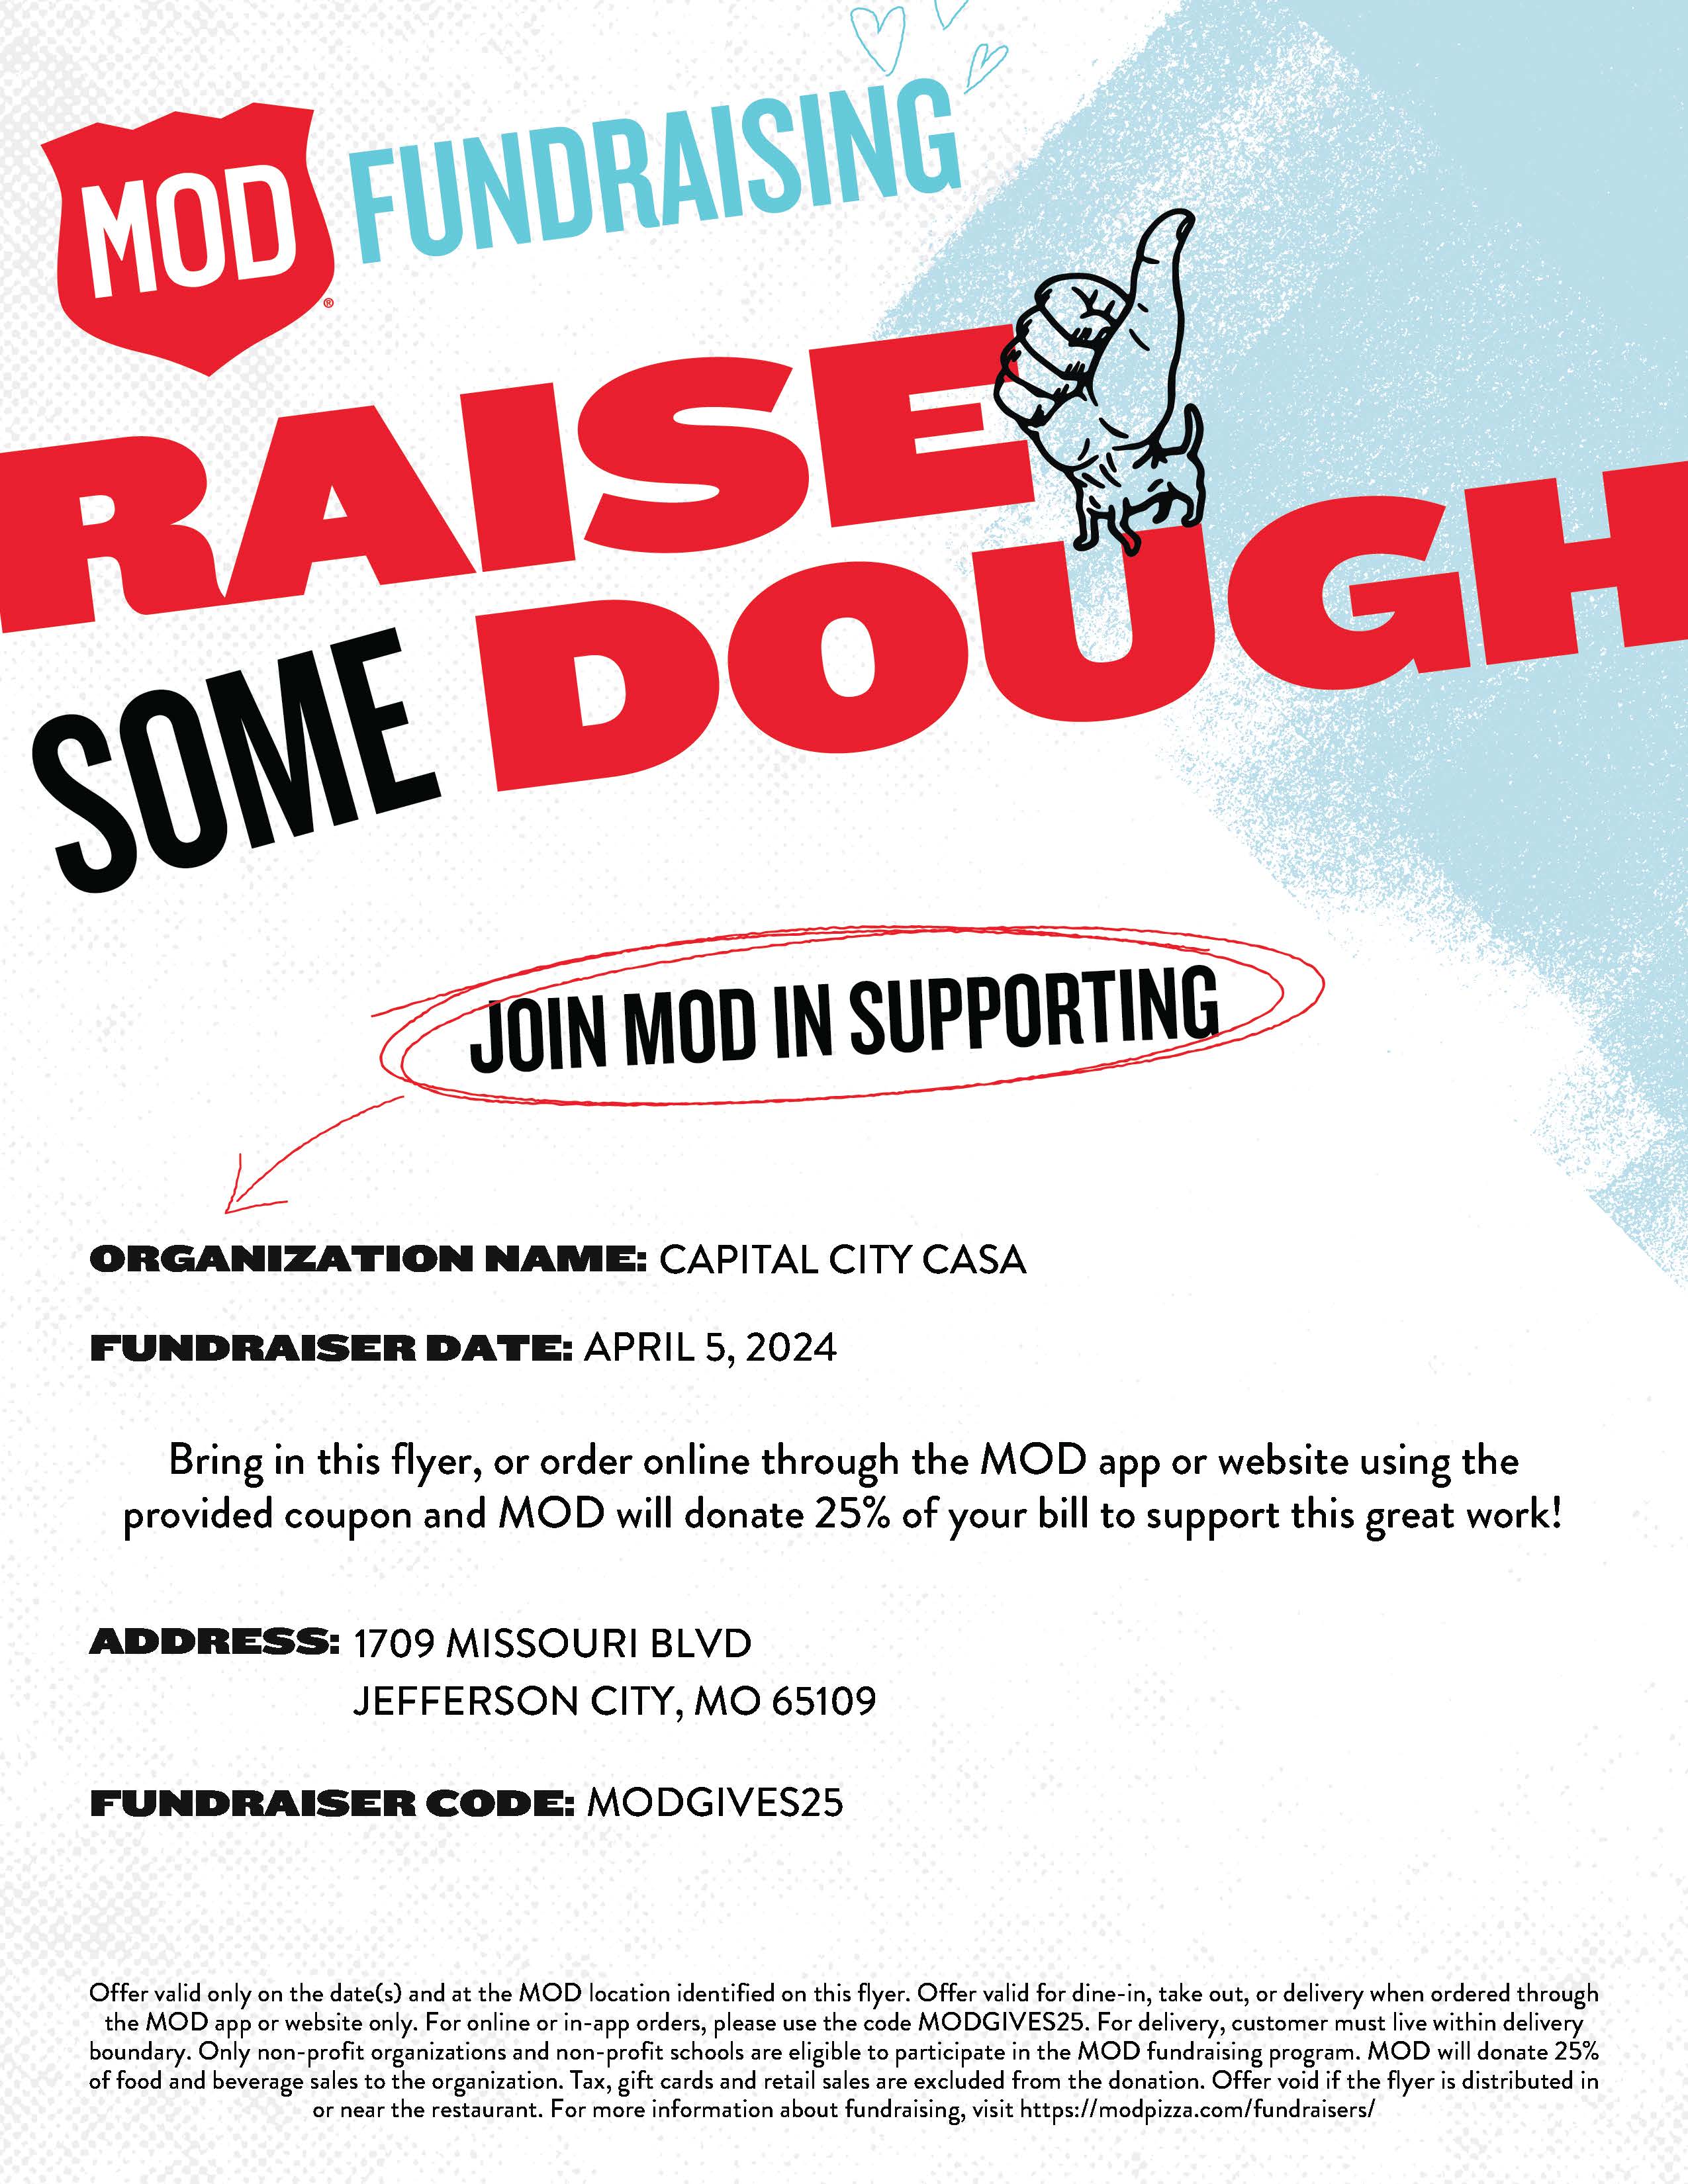 MOD Pizza Fundraiser for CASA